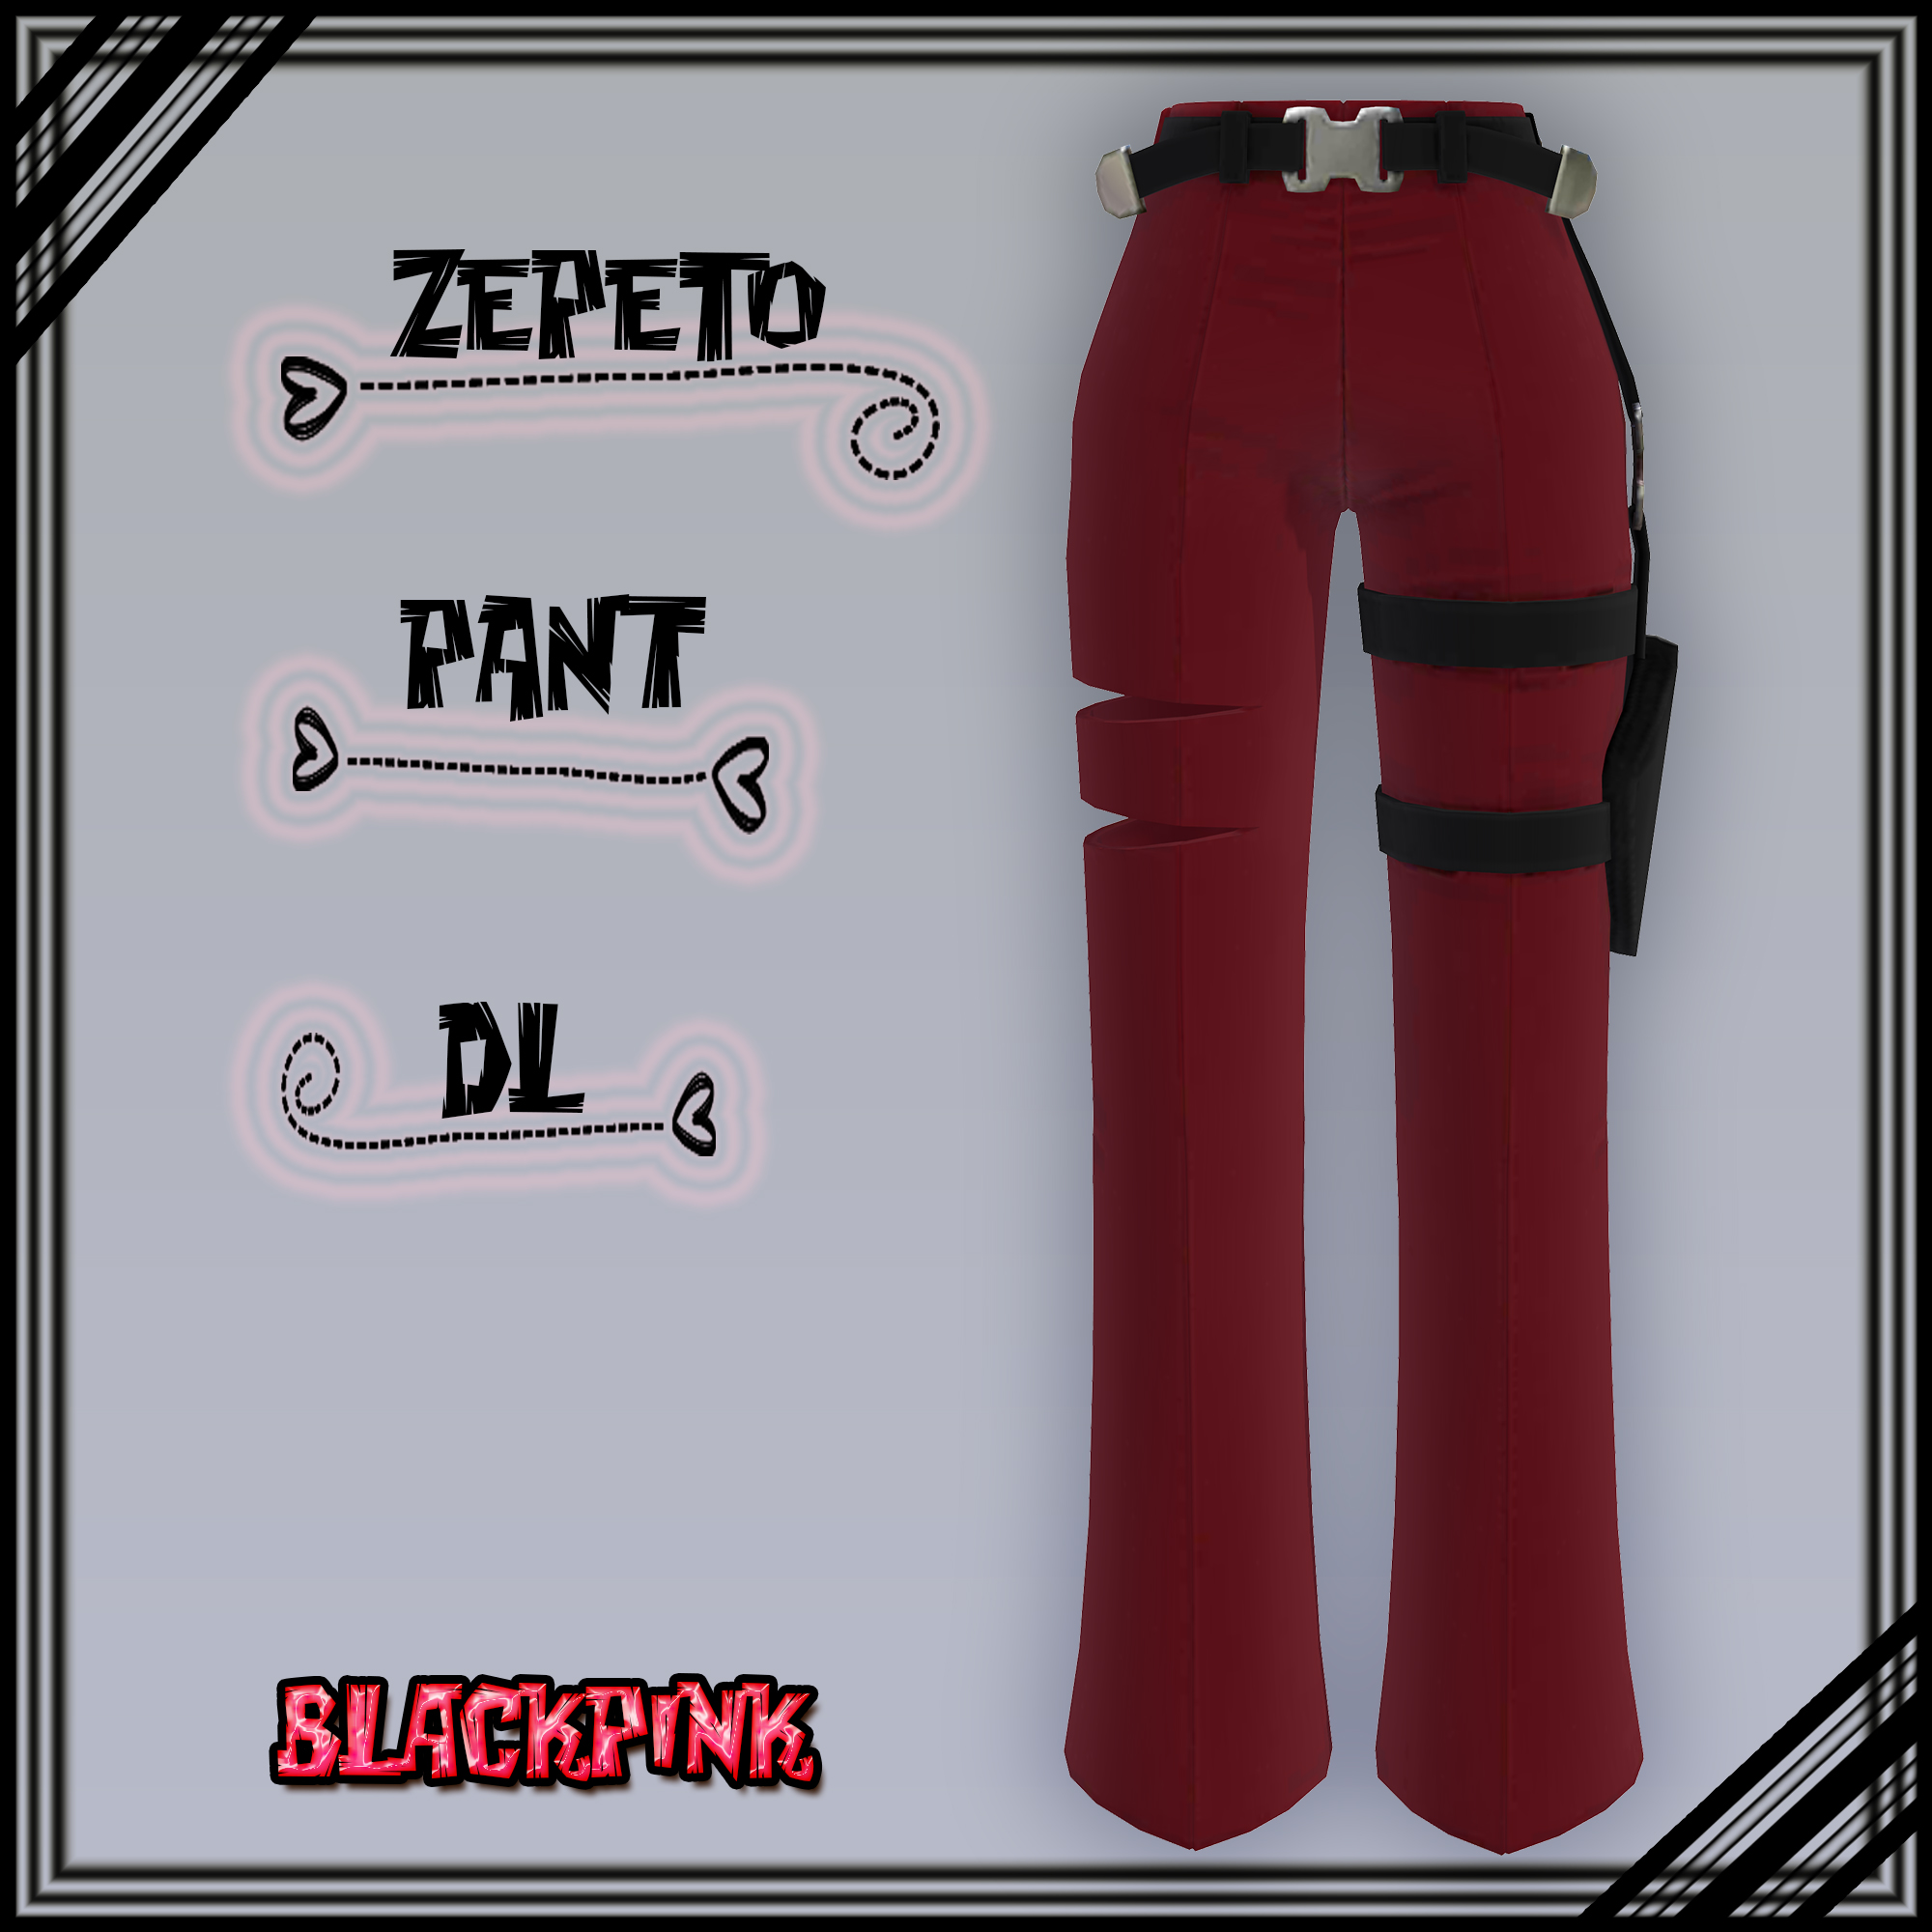 478 Zepeto Pants 02 Black Pink dl by Staralco130313DA on DeviantArt